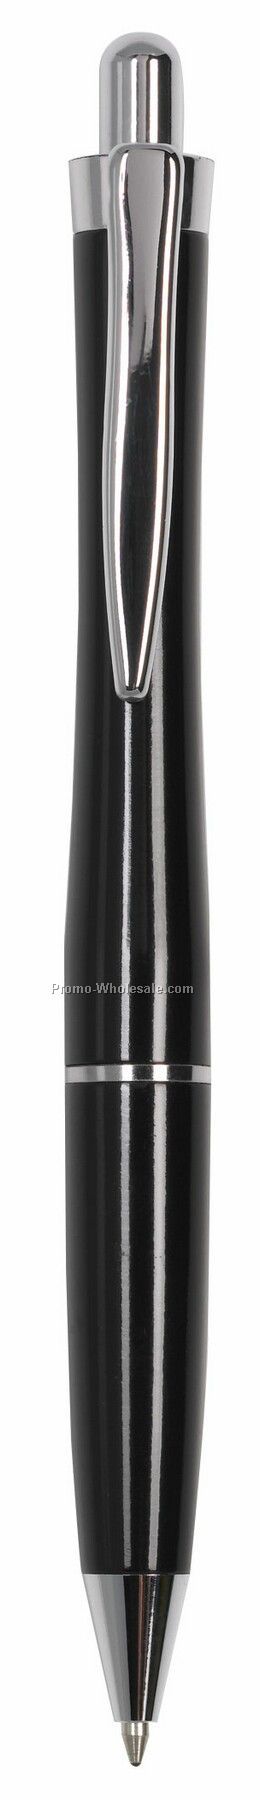 Cairo Aluminum Barrel Pen With Chrome Accent